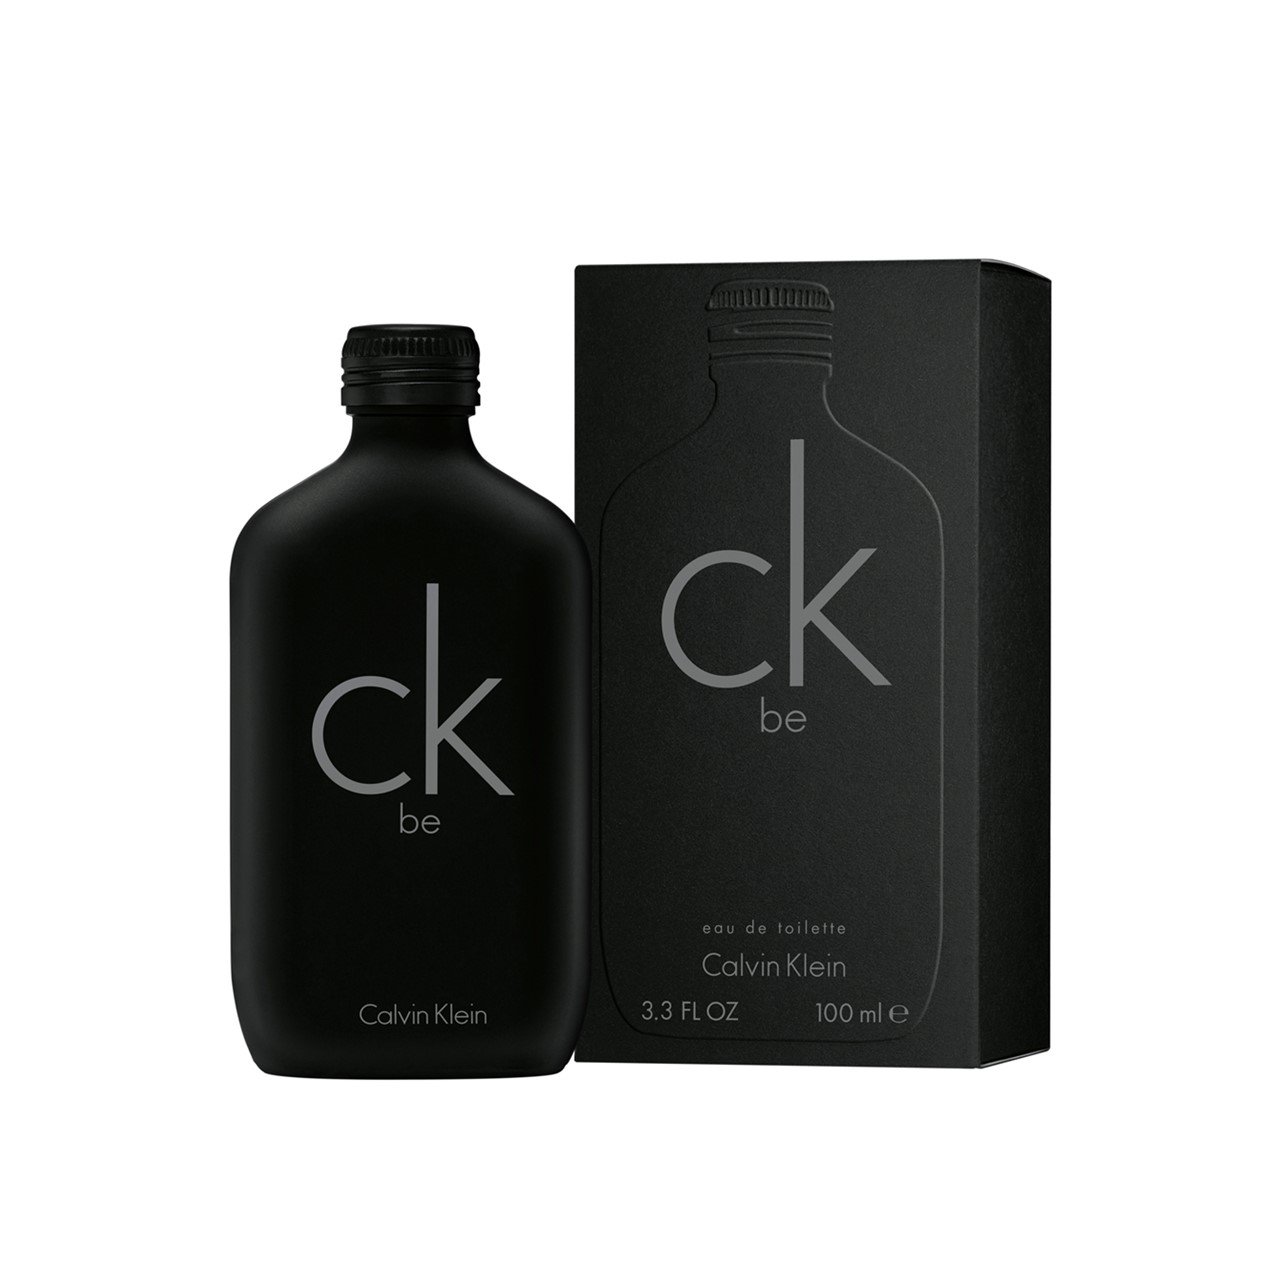 Armstrong oplichter kleermaker Buy Calvin Klein CK Be Eau de Toilette 100ml (3.4fl.oz.) · USA